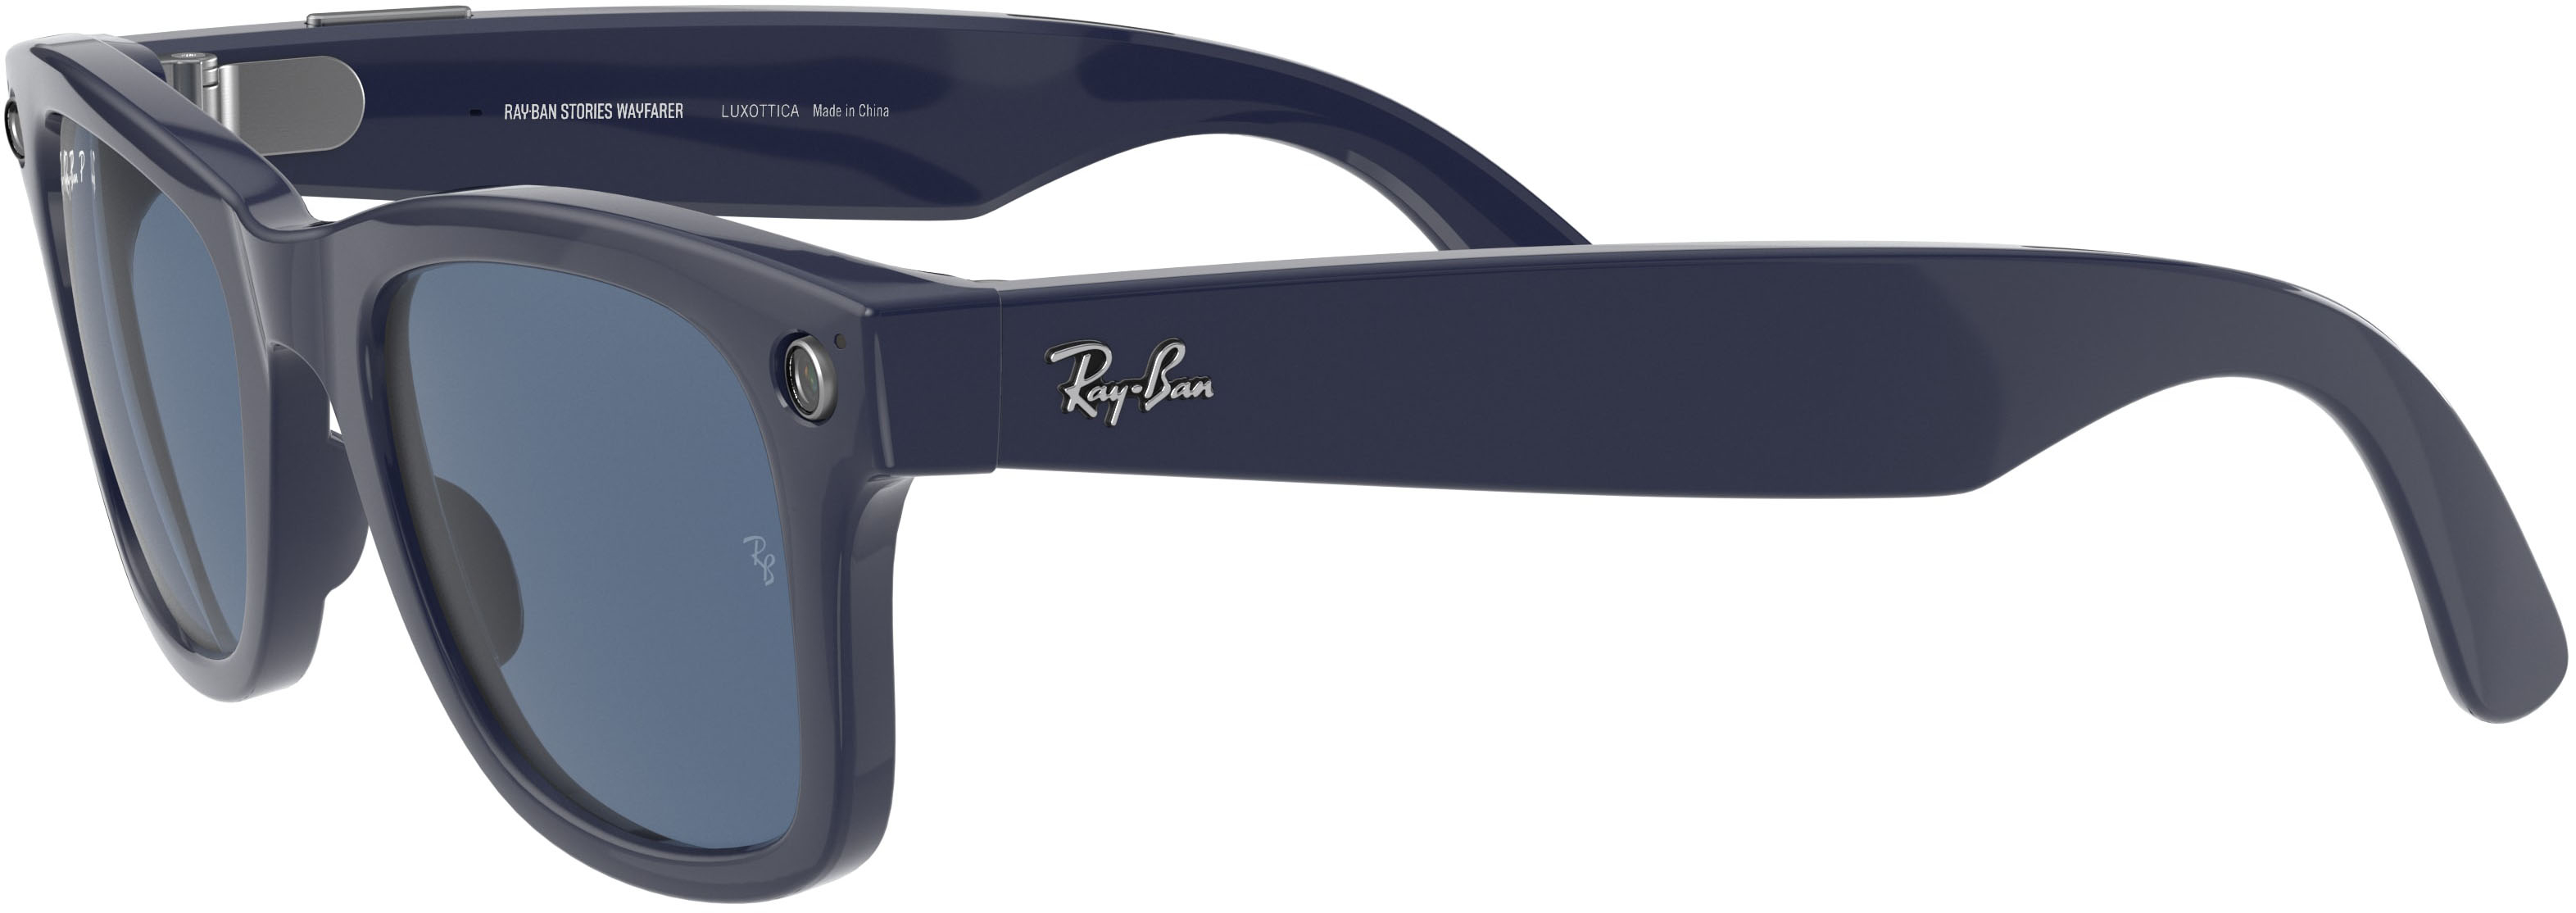 Left View: Ray-Ban - Stories Wayfarer Smart Glasses 50mm - Shiny Blue/Dark Blue Polarized